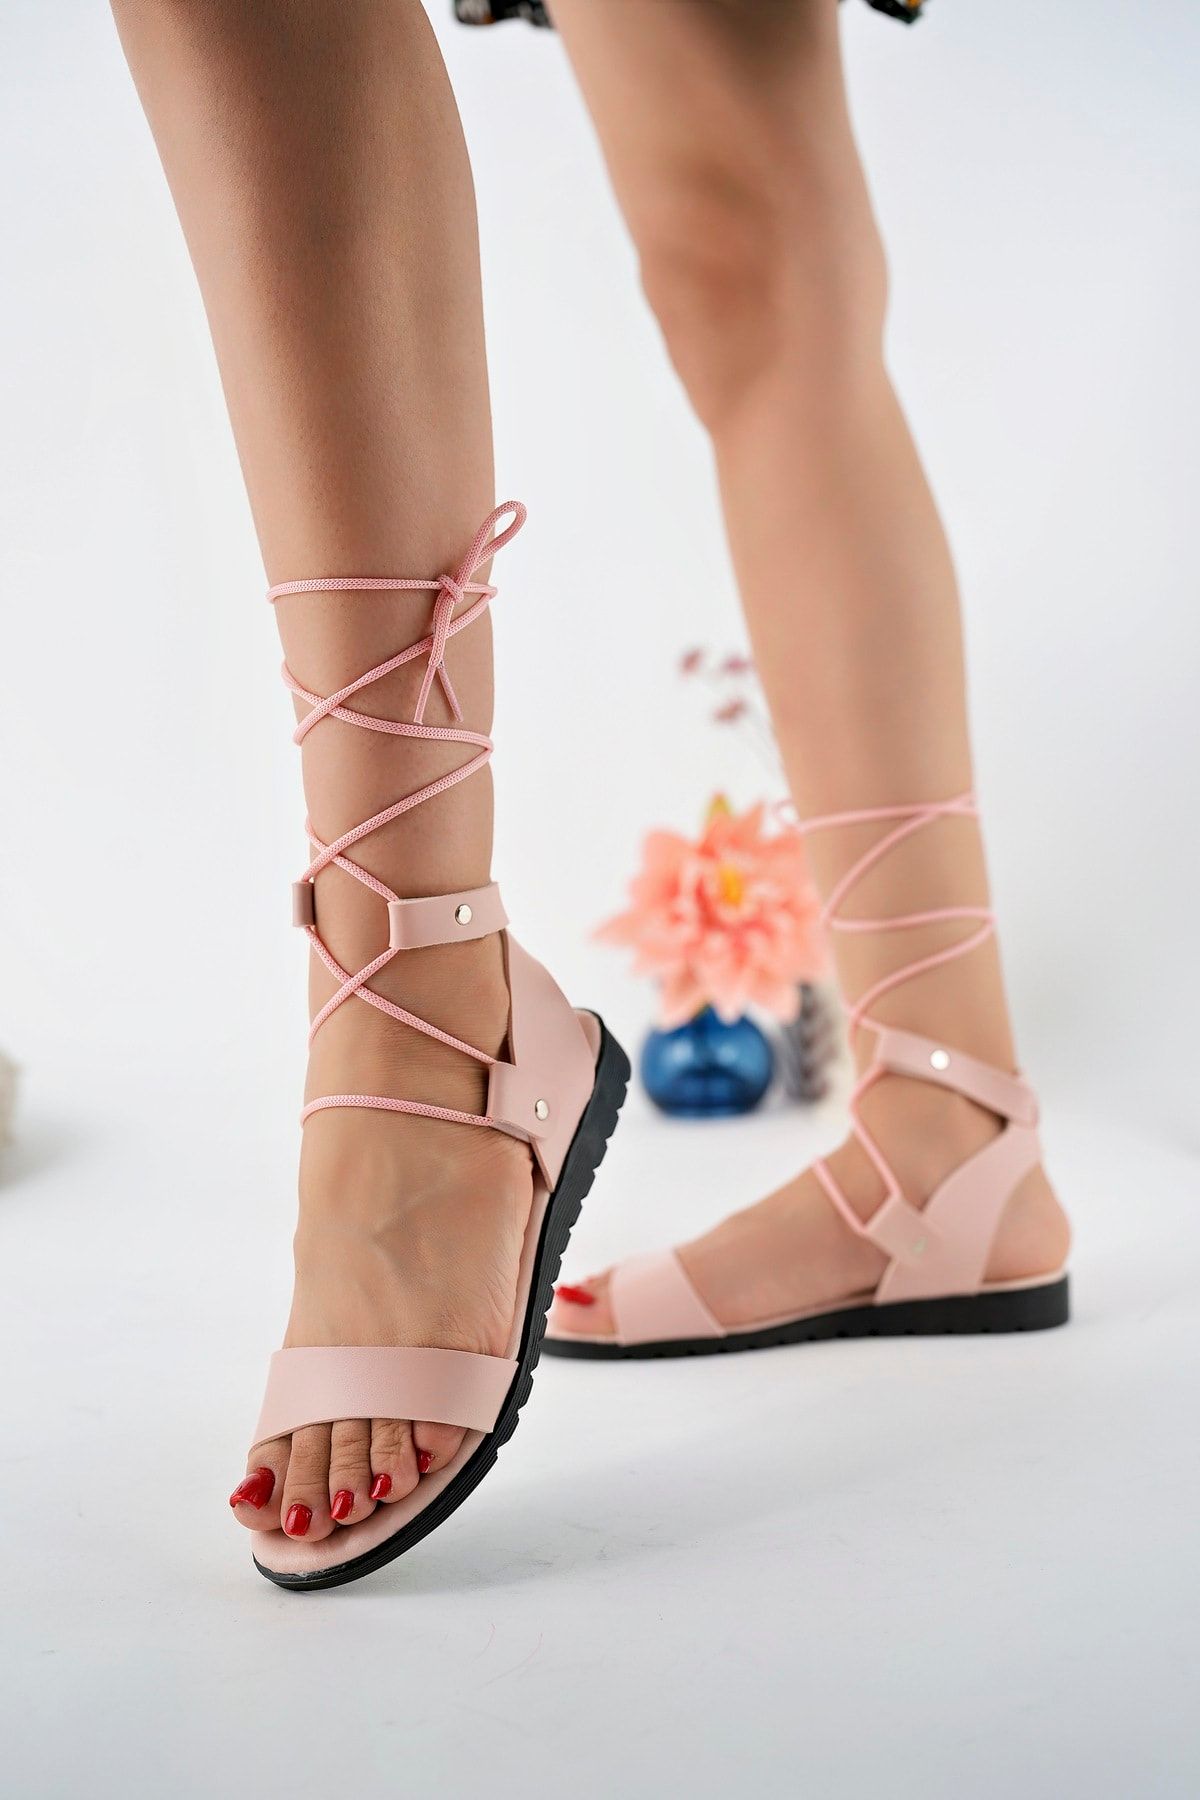 StWenn Lace Women's Sandals Comfortable Lightweight Sole - Trendyol